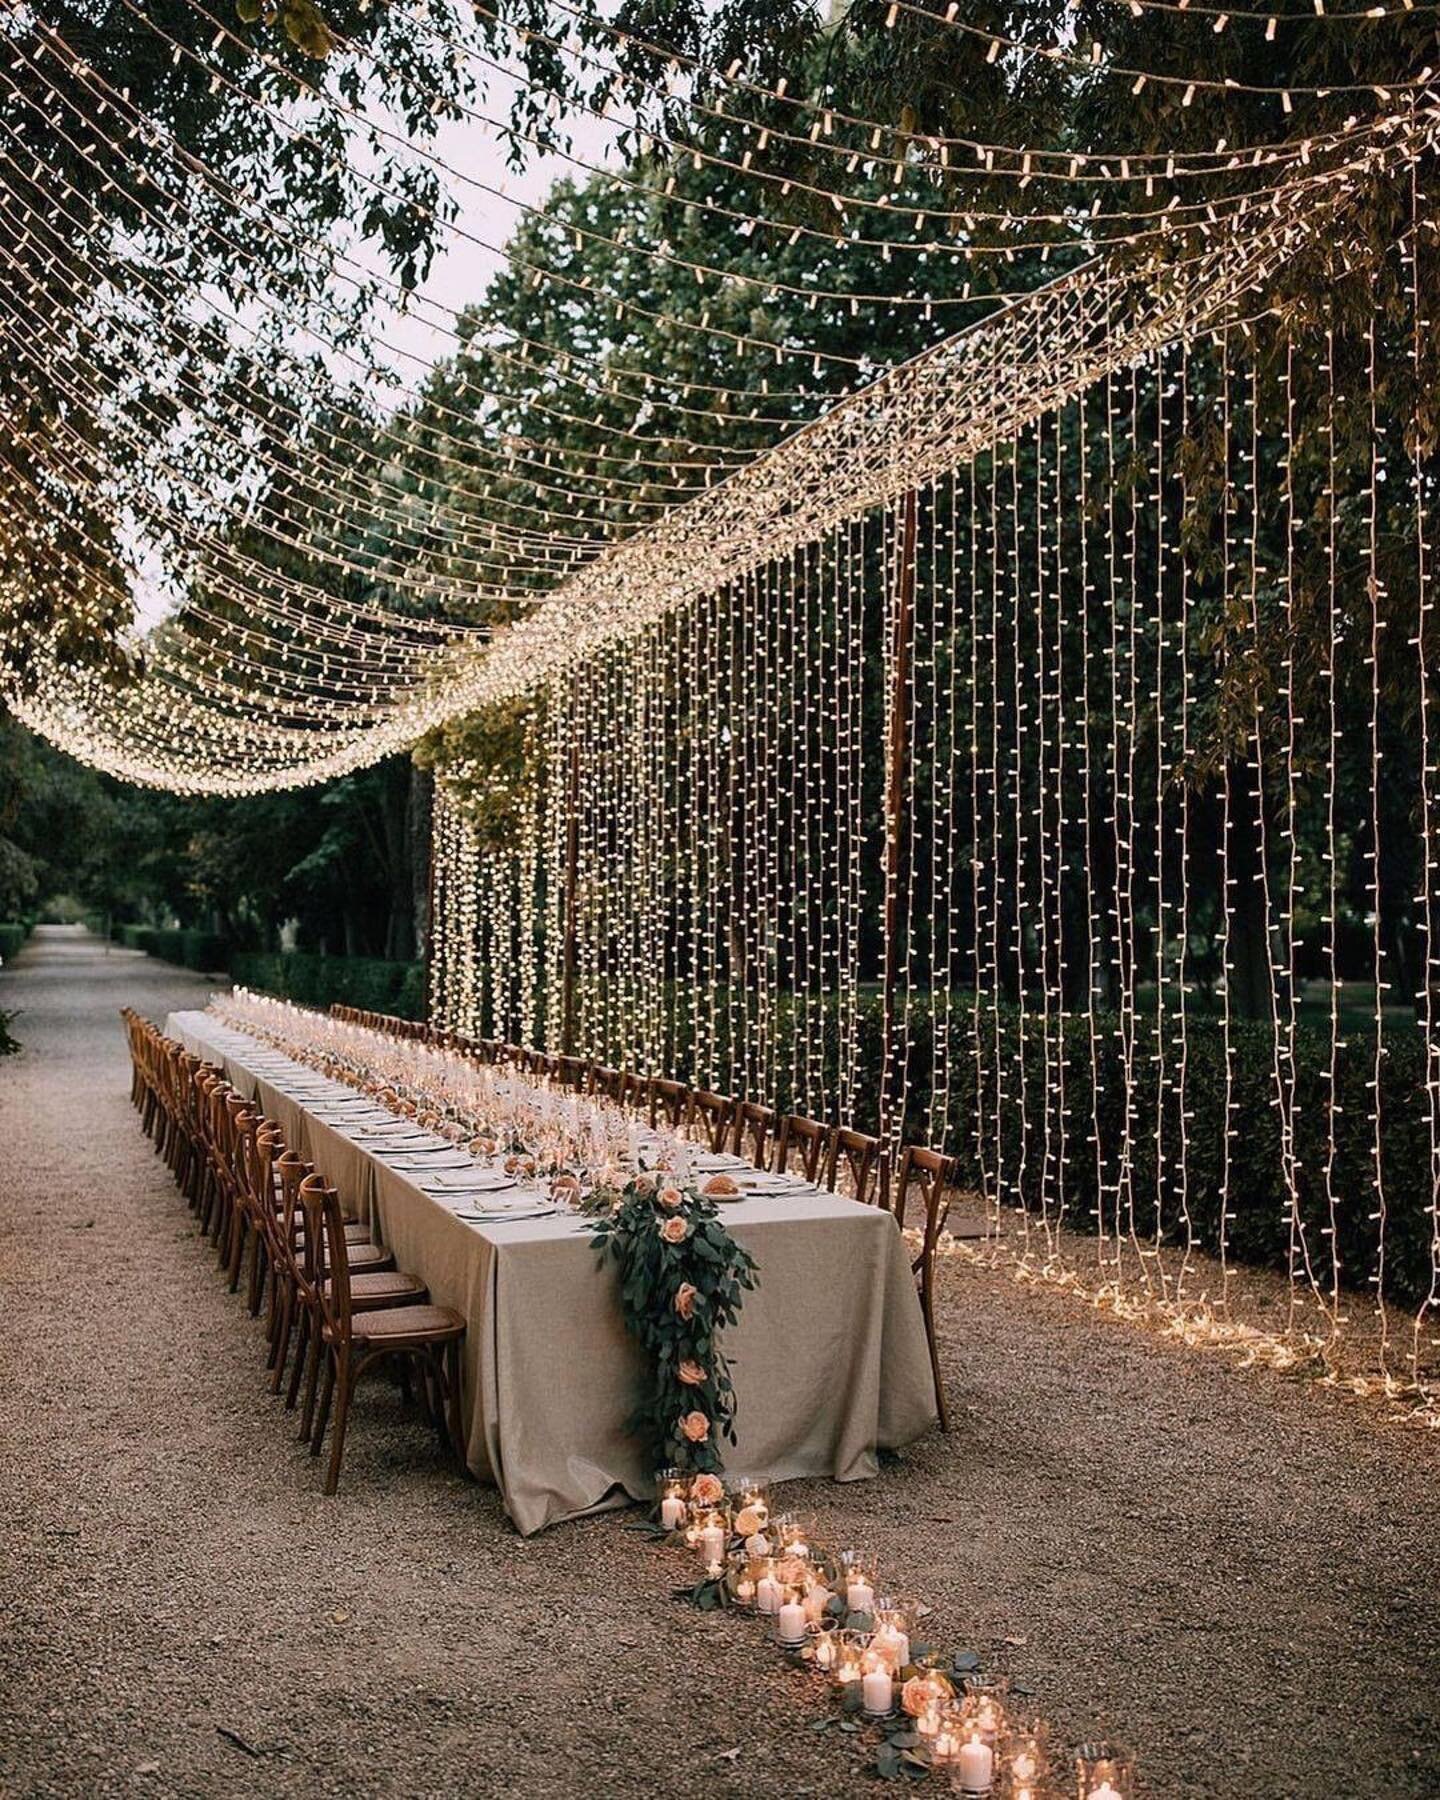 Dinner under the twinkle lights! #Repost @weddingchicks
@pablo_laguia
@palomacruzwp&nbsp;
@davidrodriguez.v&nbsp;
@enfelizate&nbsp;
@thelighteam_ledilux&nbsp;
@palaciodevillahermosa 
&bull;
&bull;
&bull;
#wedding #dreamwedding #weddinginspo #dinnerta